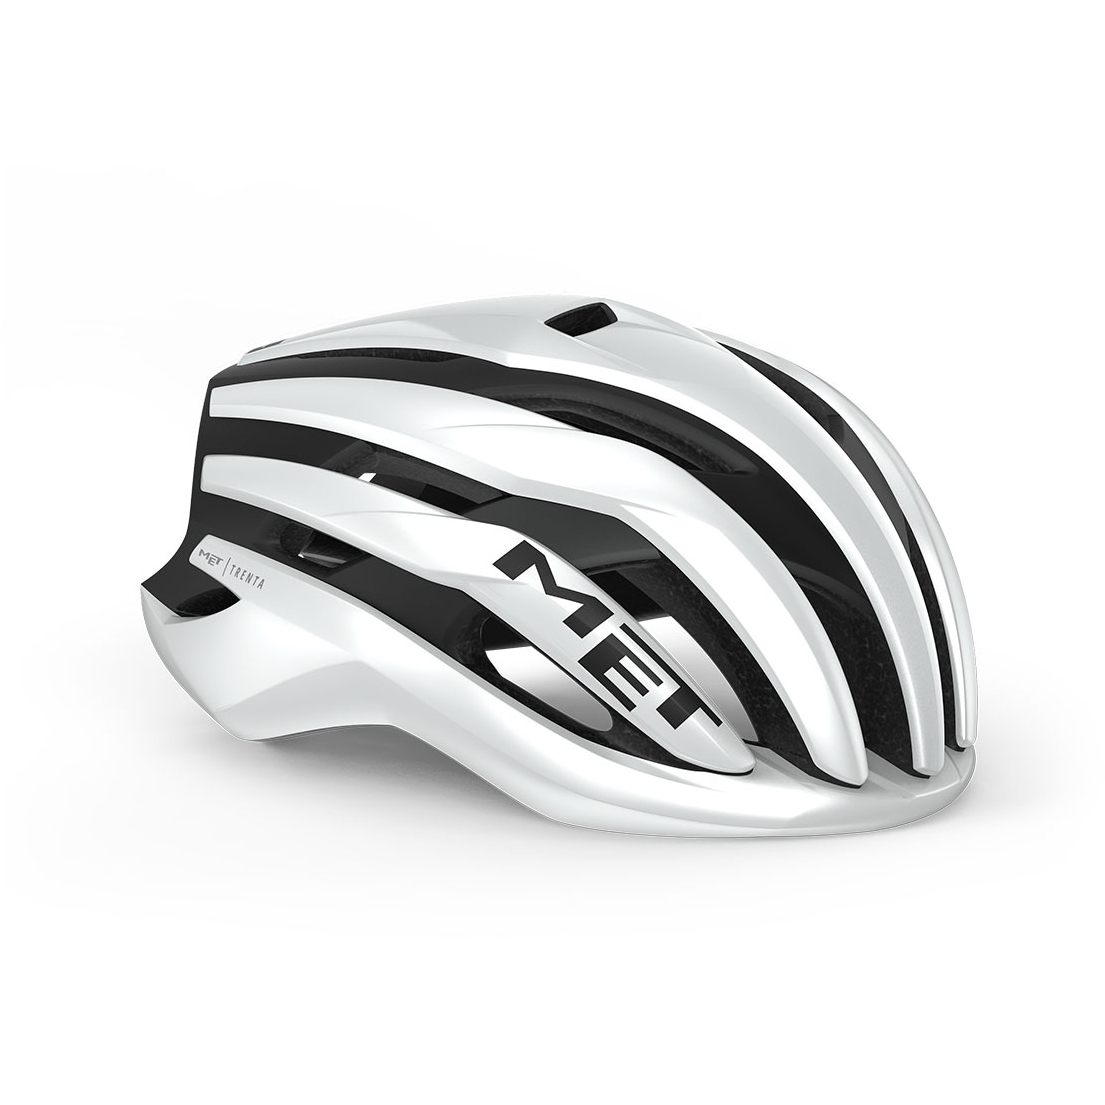 Picture of MET Trenta MIPS Helmet - white/black matt glossy